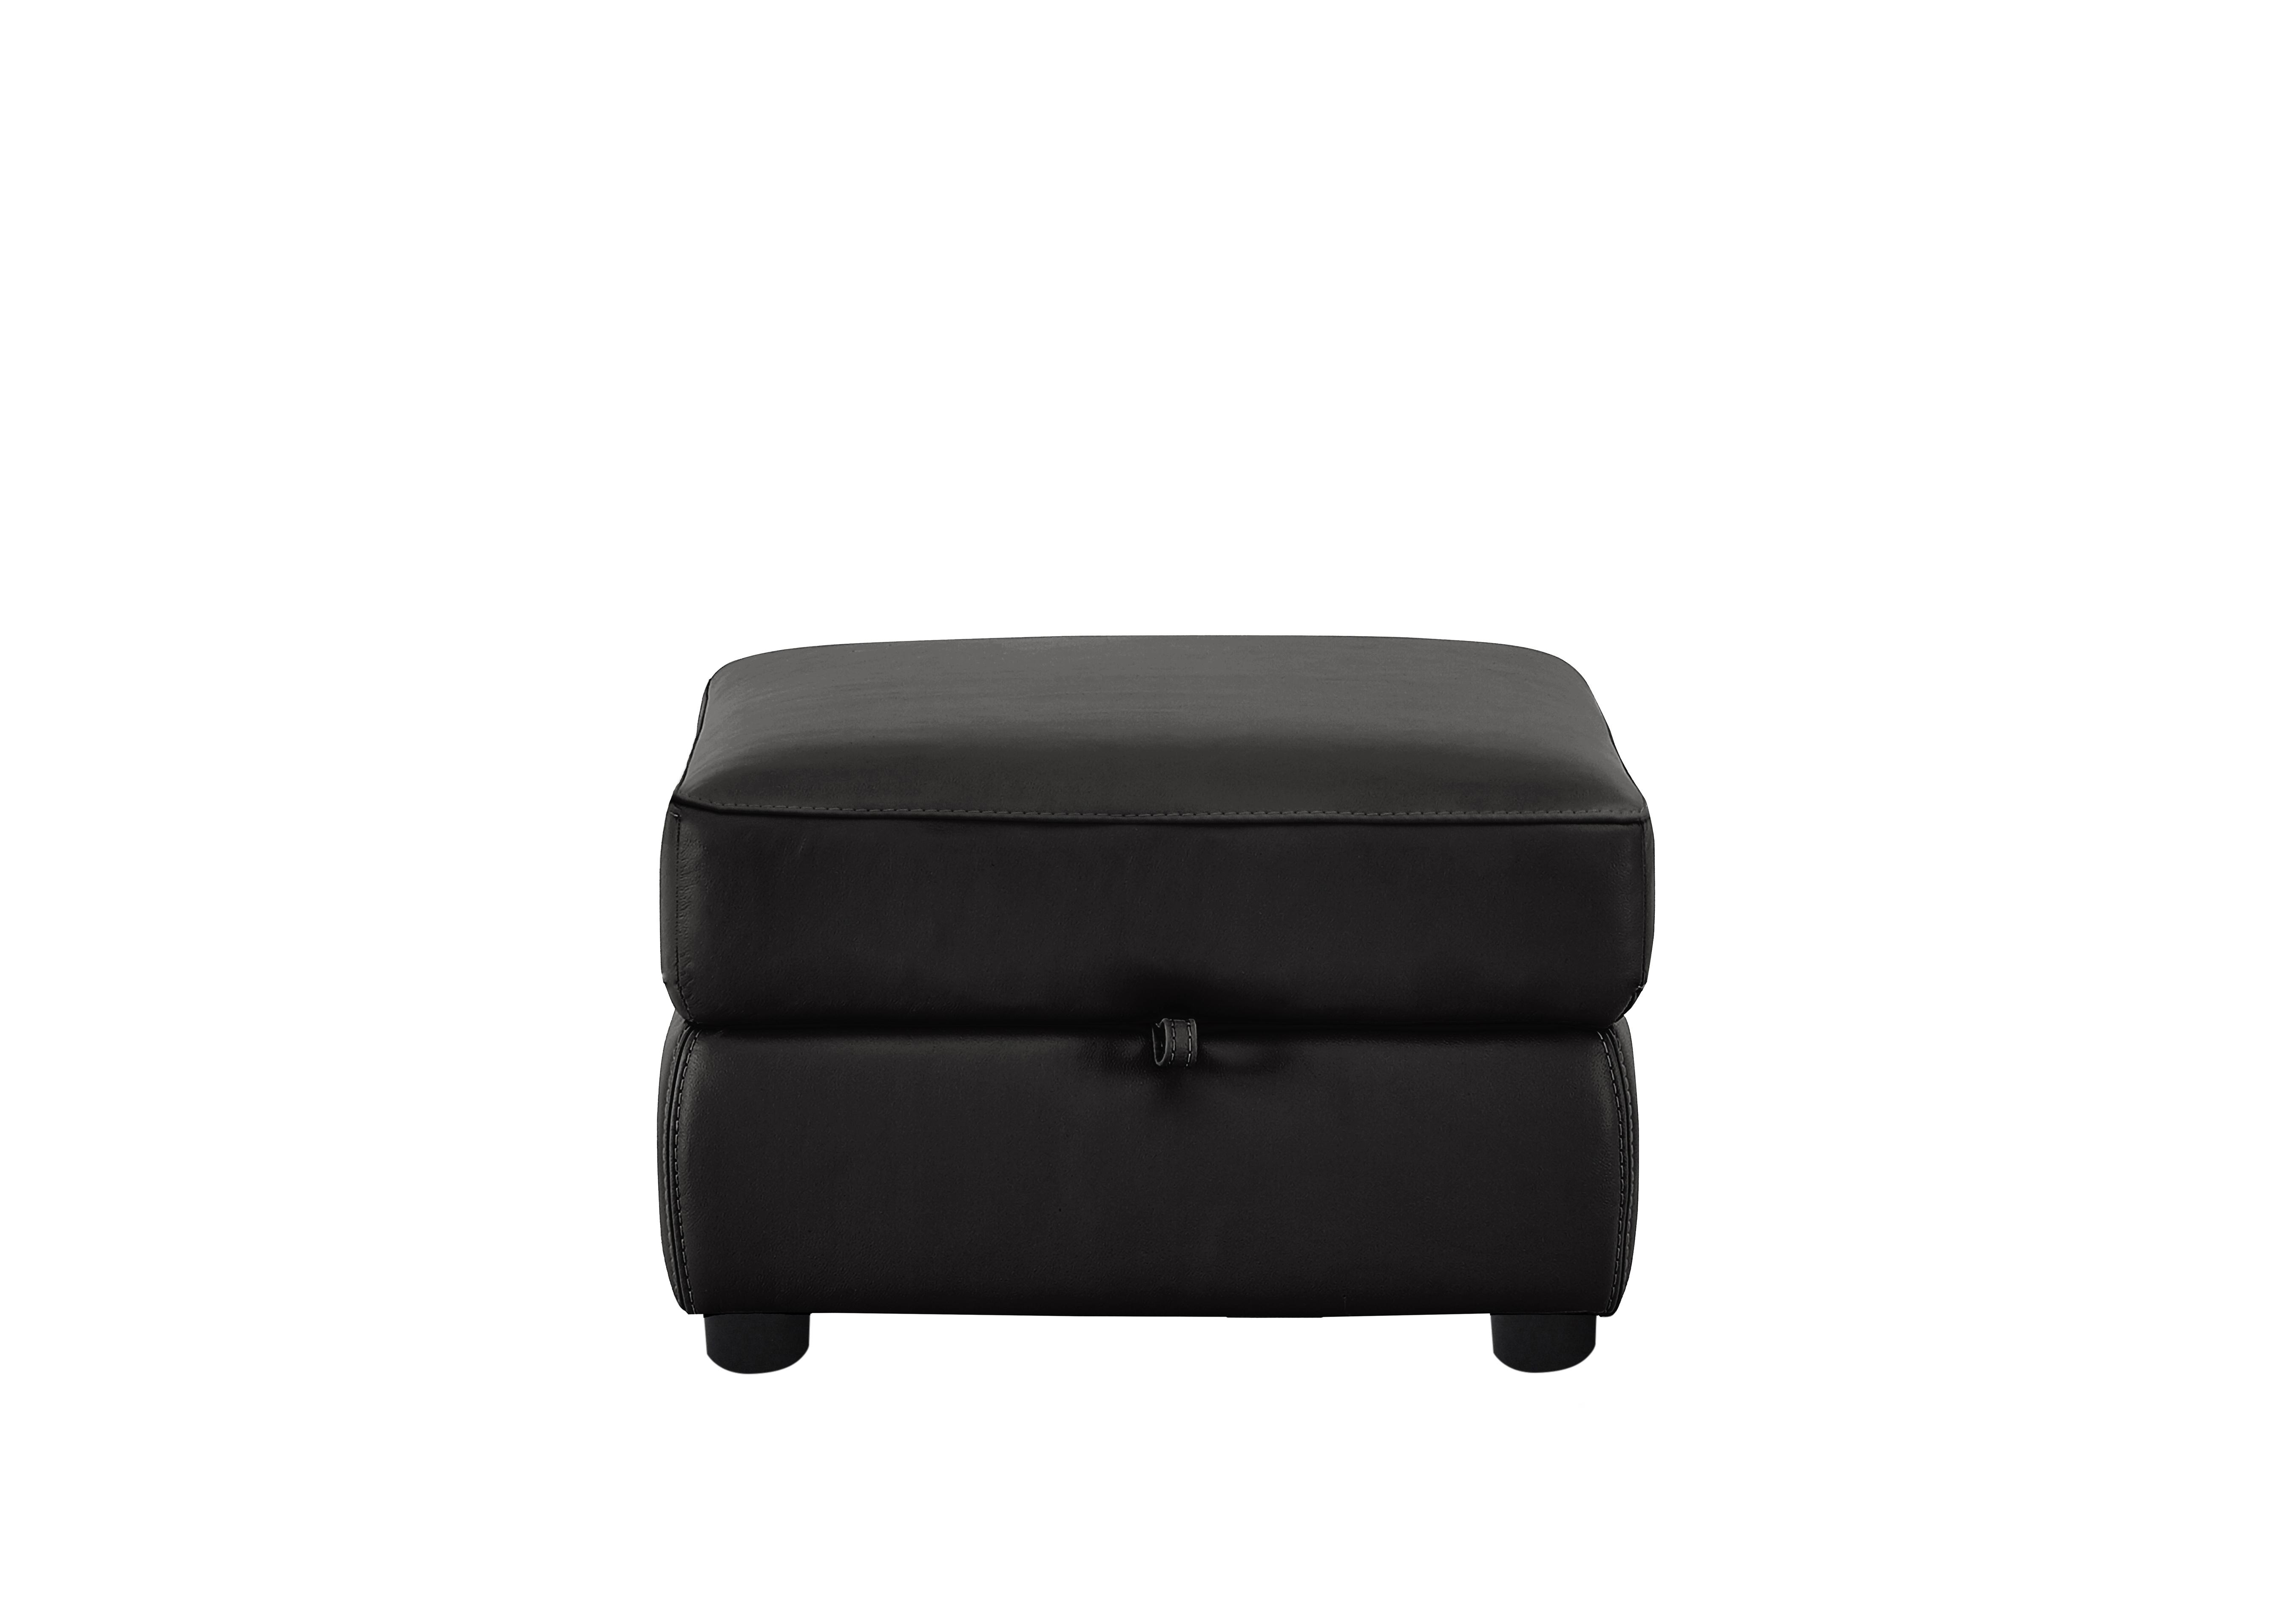 Snug Leather Storage Footstool in Bv-3500 Classic Black on Furniture Village